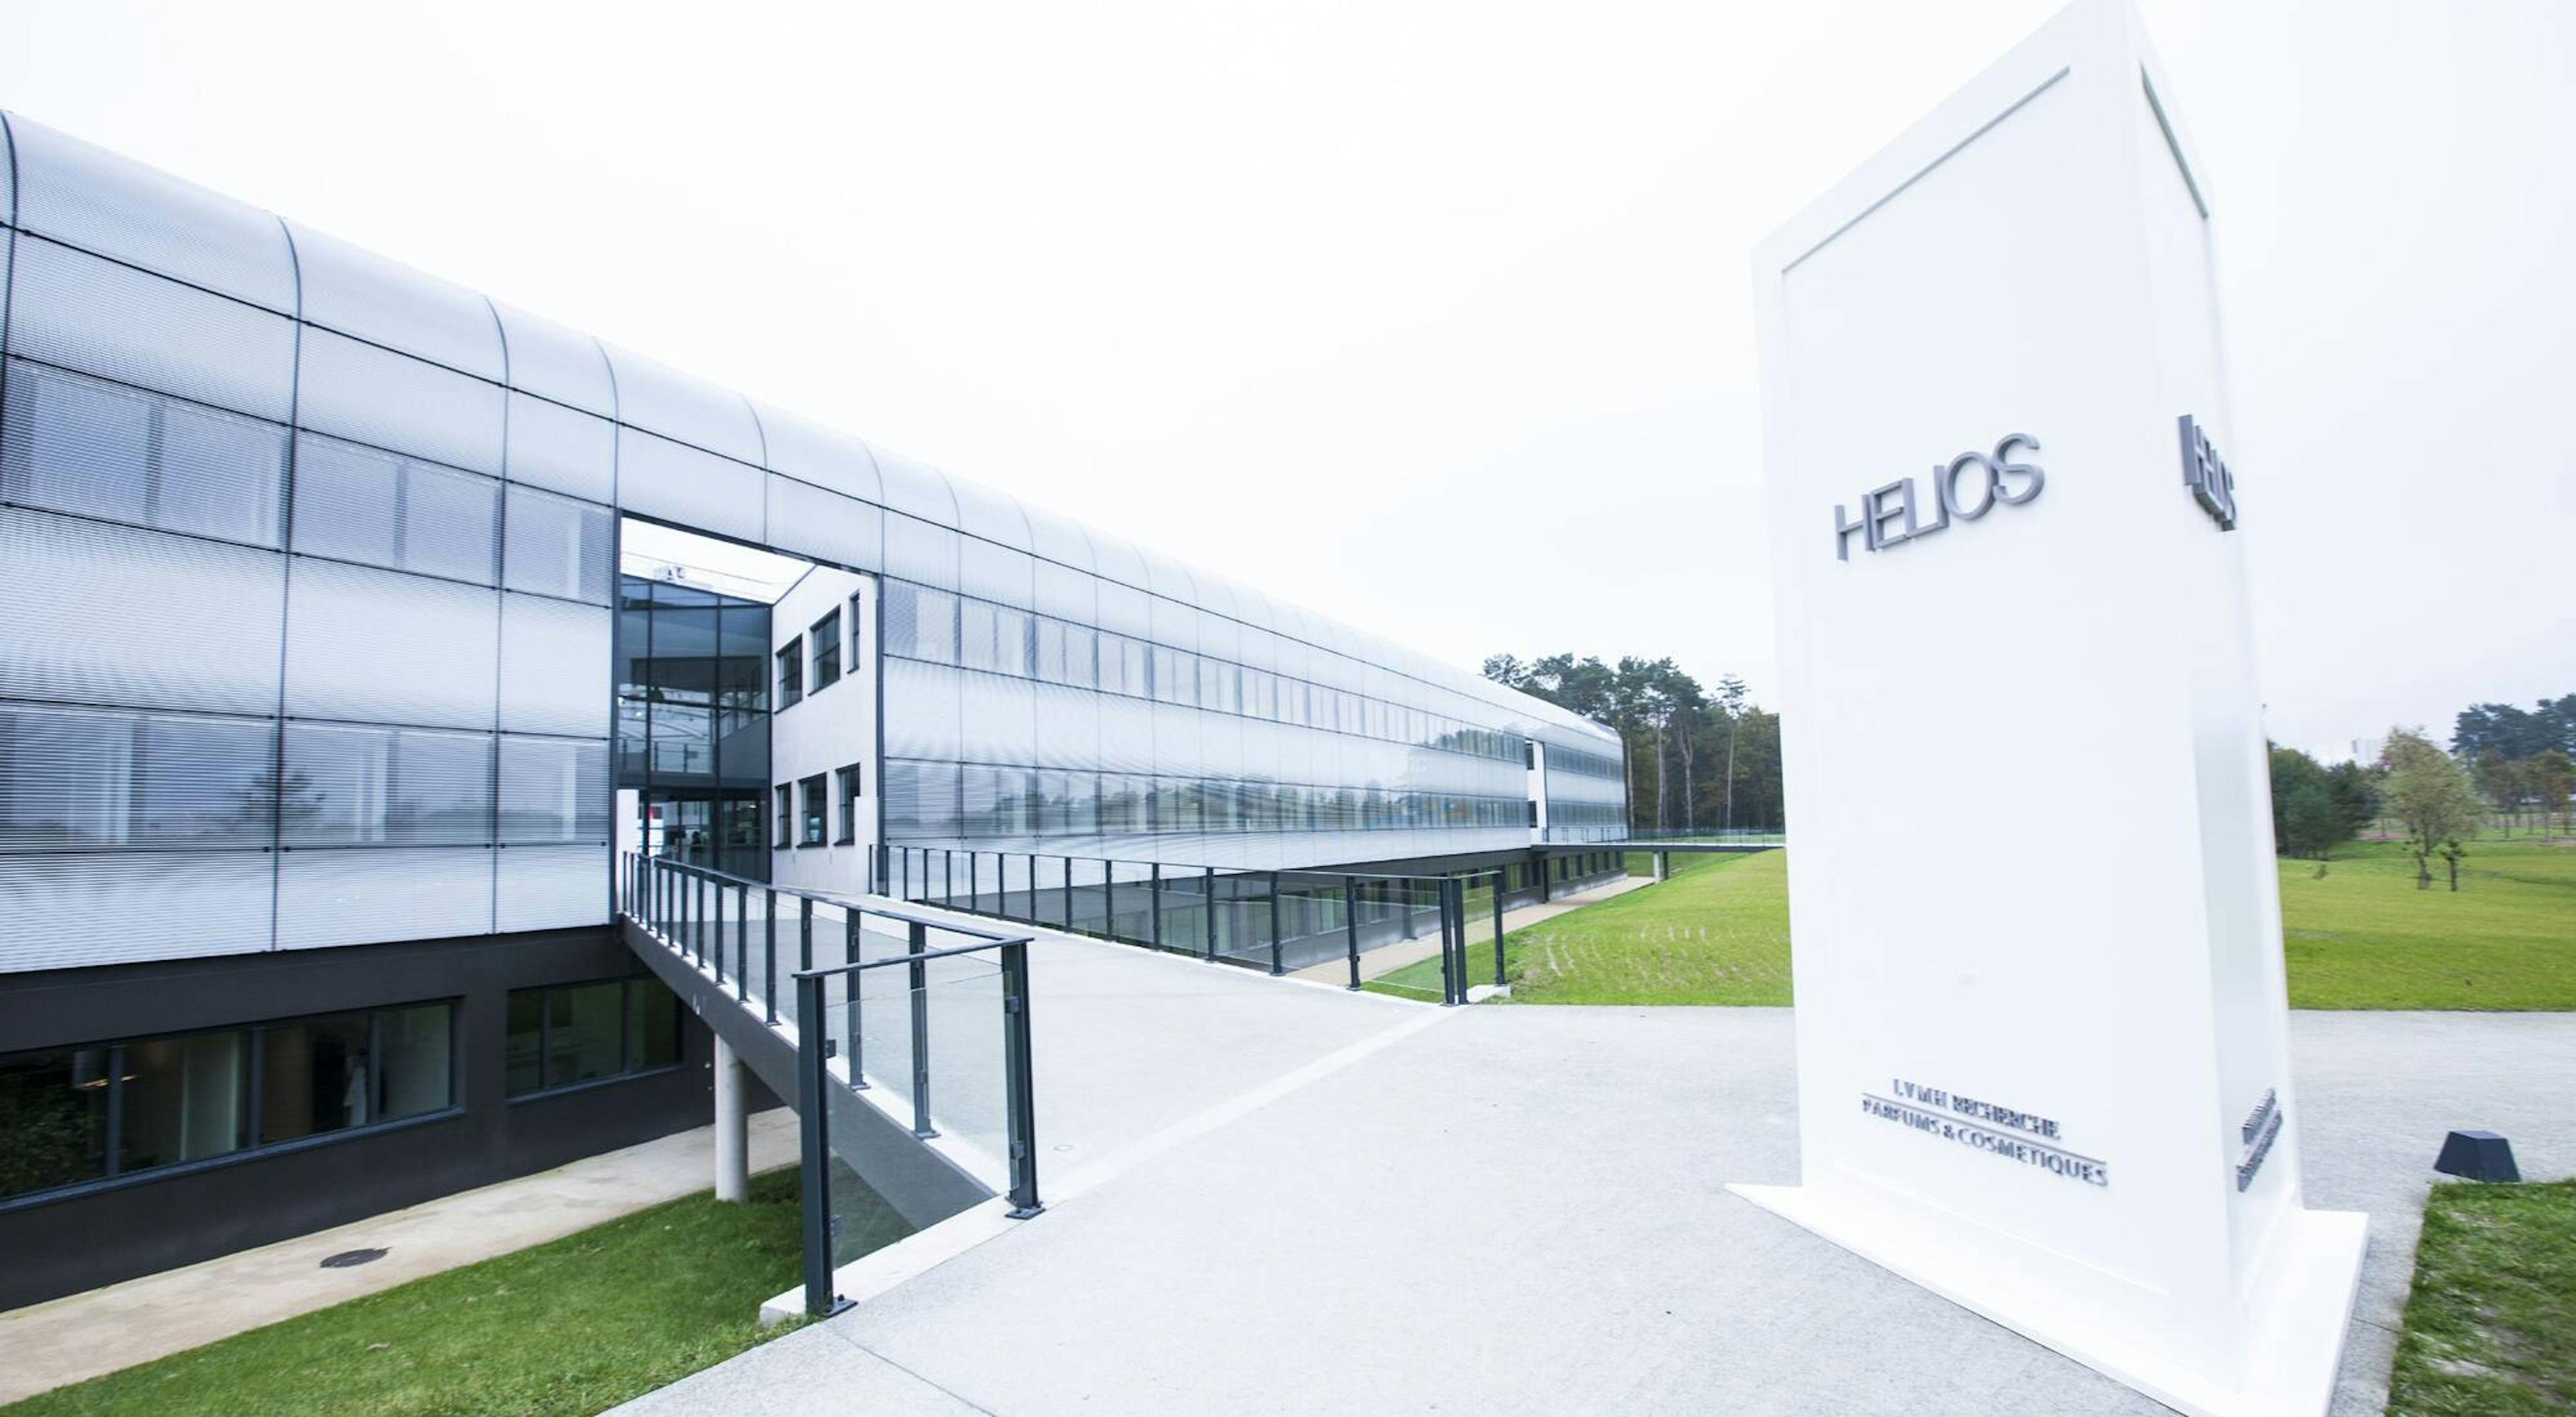 Photo of Hélios building